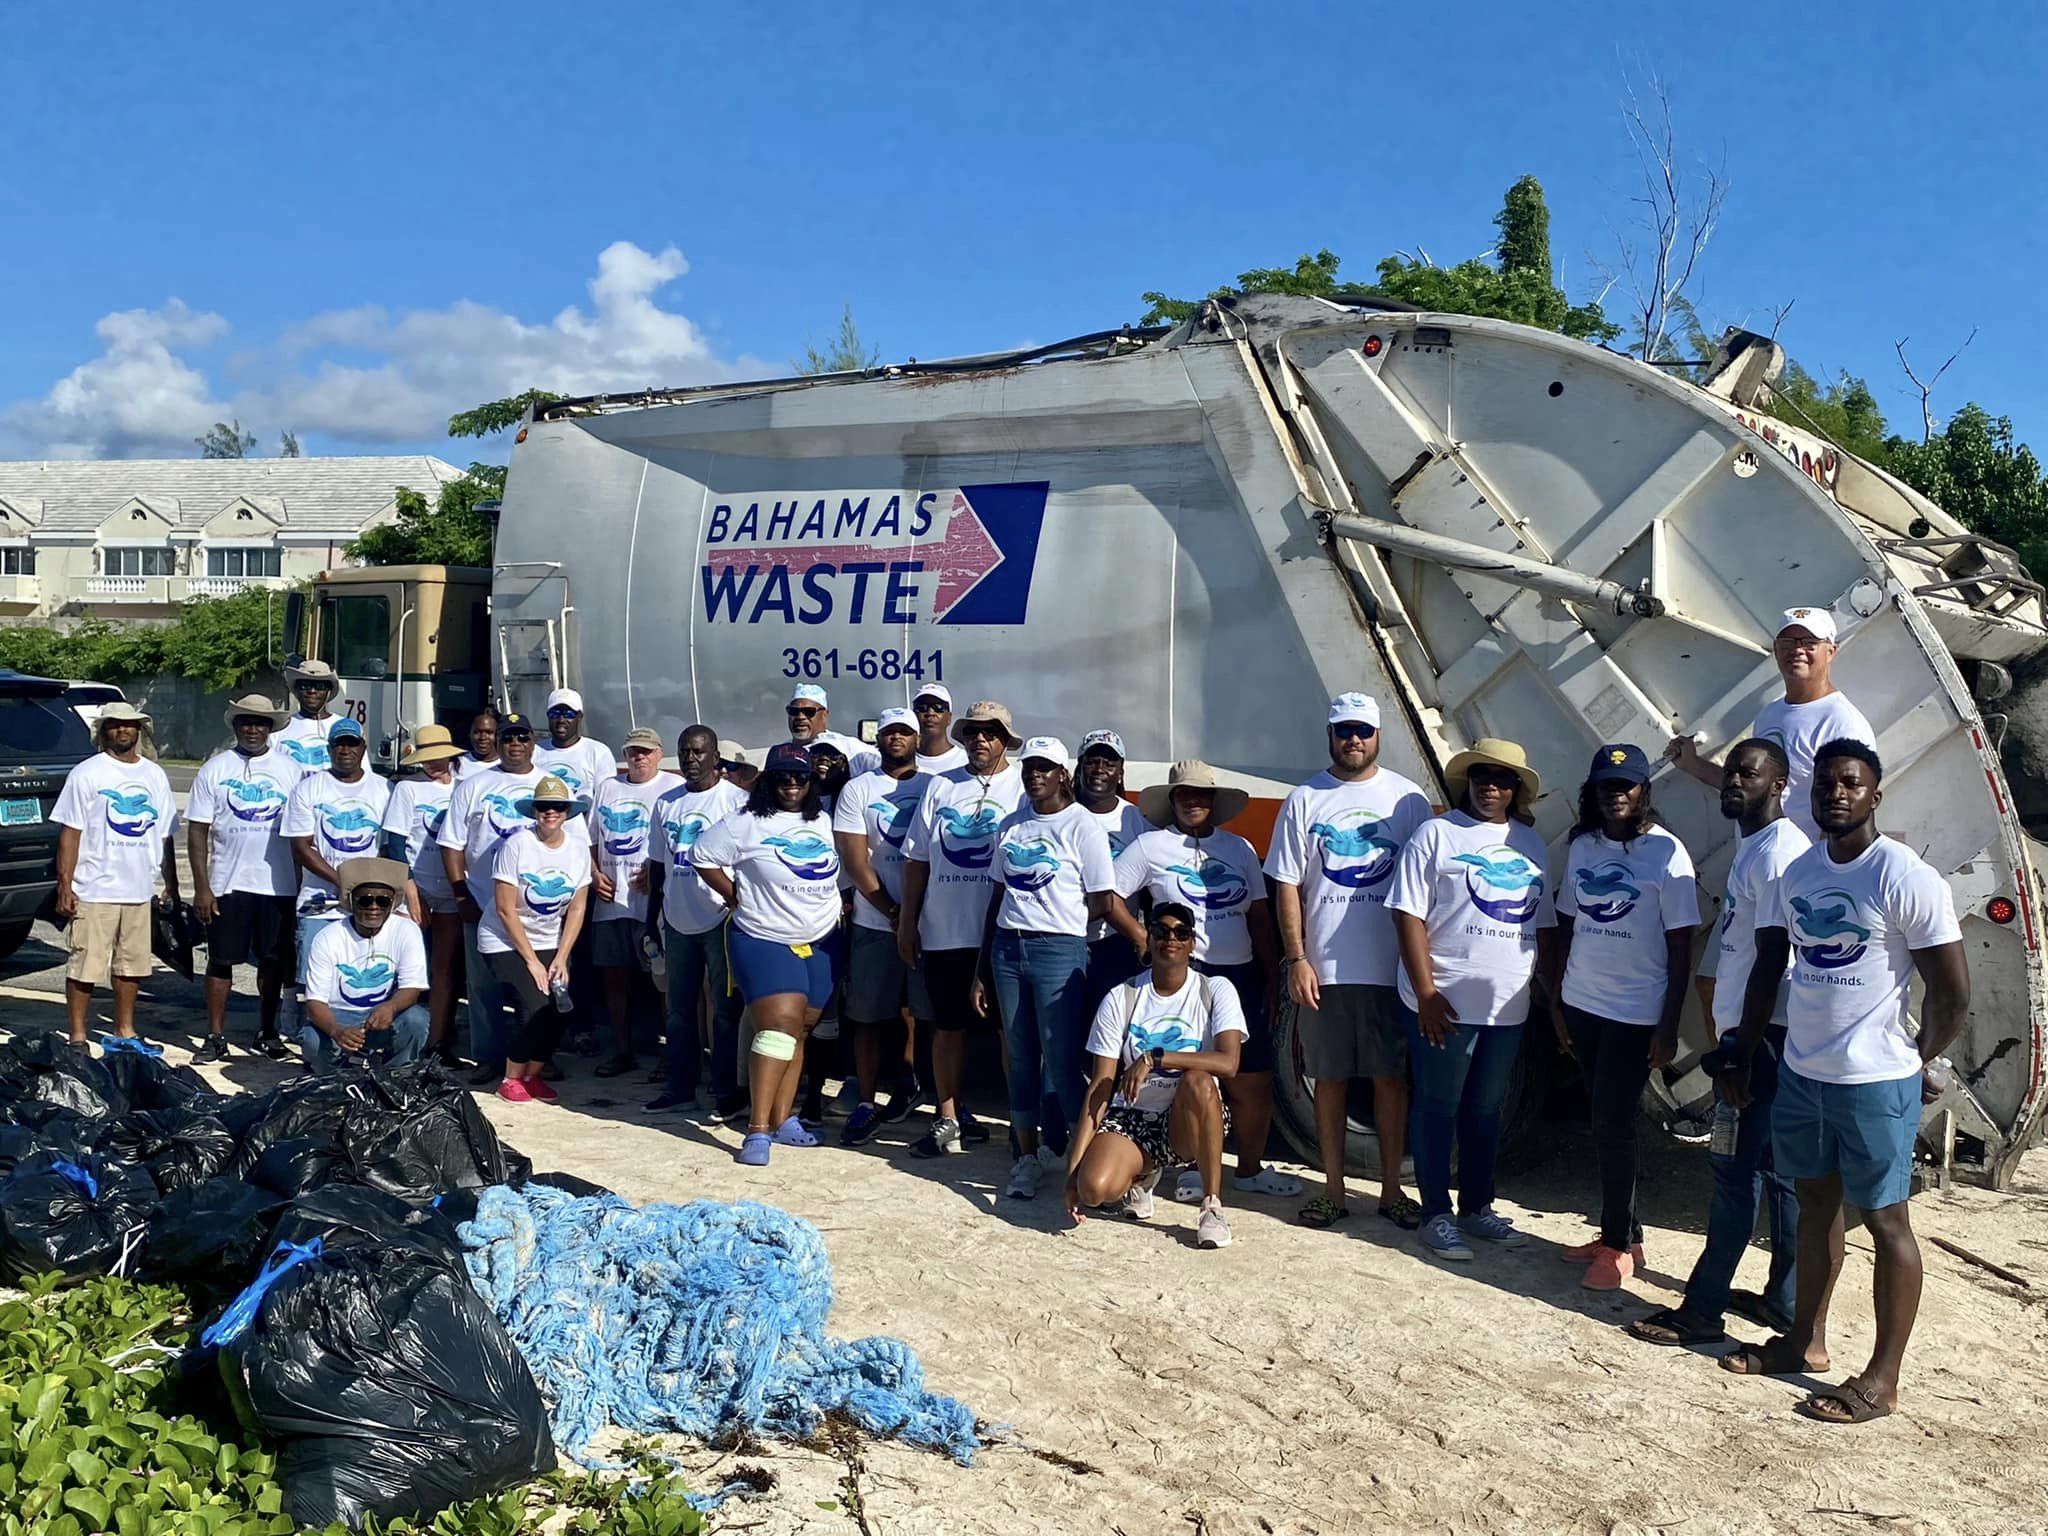 Nassau Cruise Port Leads Beach Clean Up for International Coastal Day